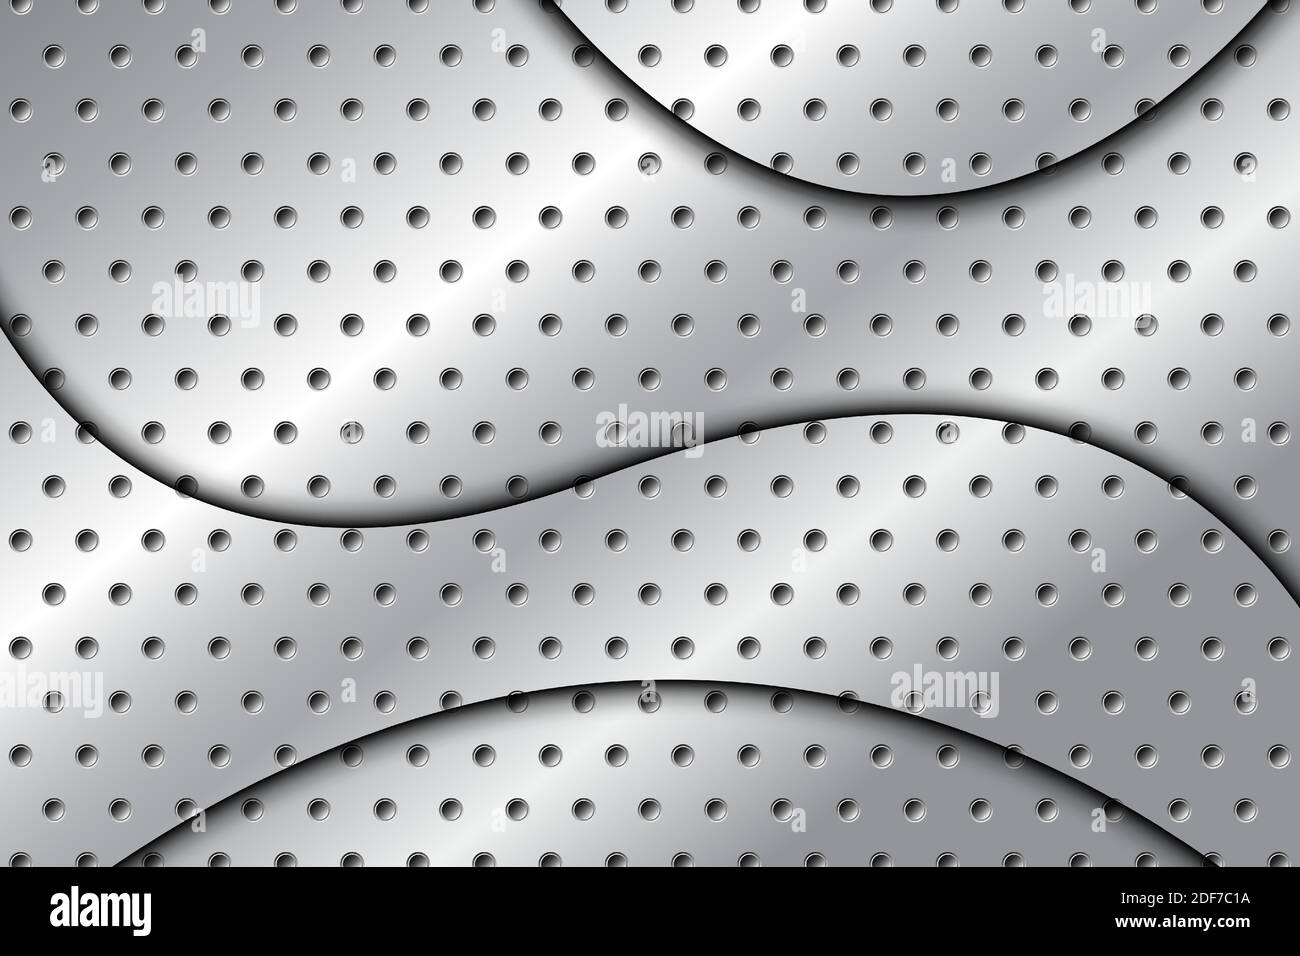 abstract metal aluminum grille design sheet background. illustration ...